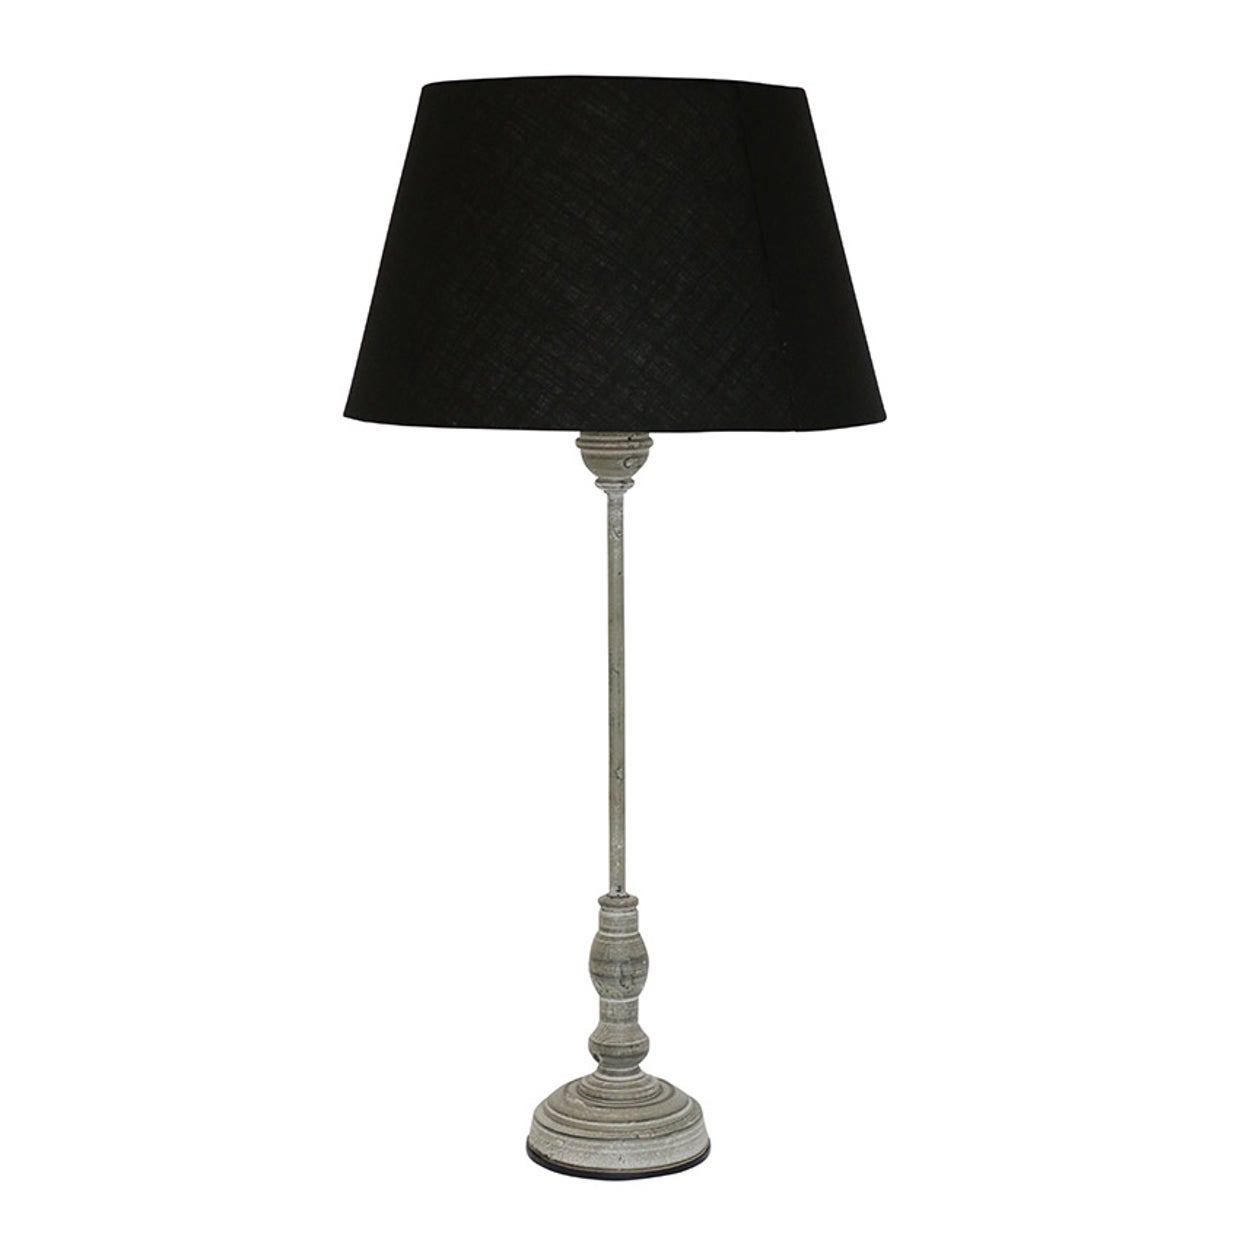 Set of 2 Slate/Black Provincial Style Table Lamp Base in Sandstone